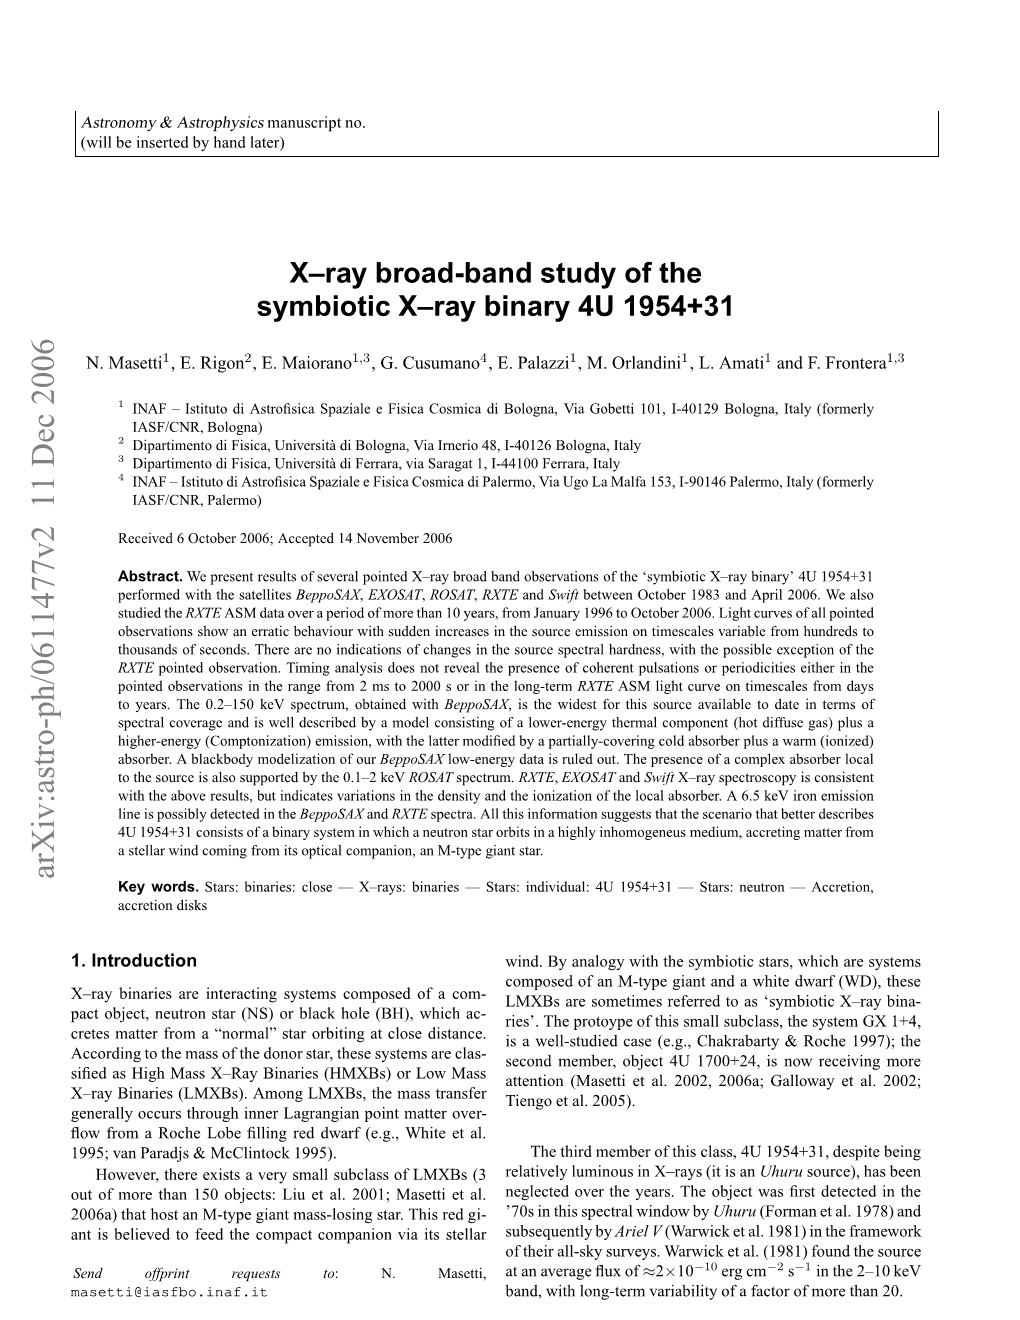 X-Ray Broad-Band Study of the Symbiotic X-Ray Binary 4U 1954+ 31